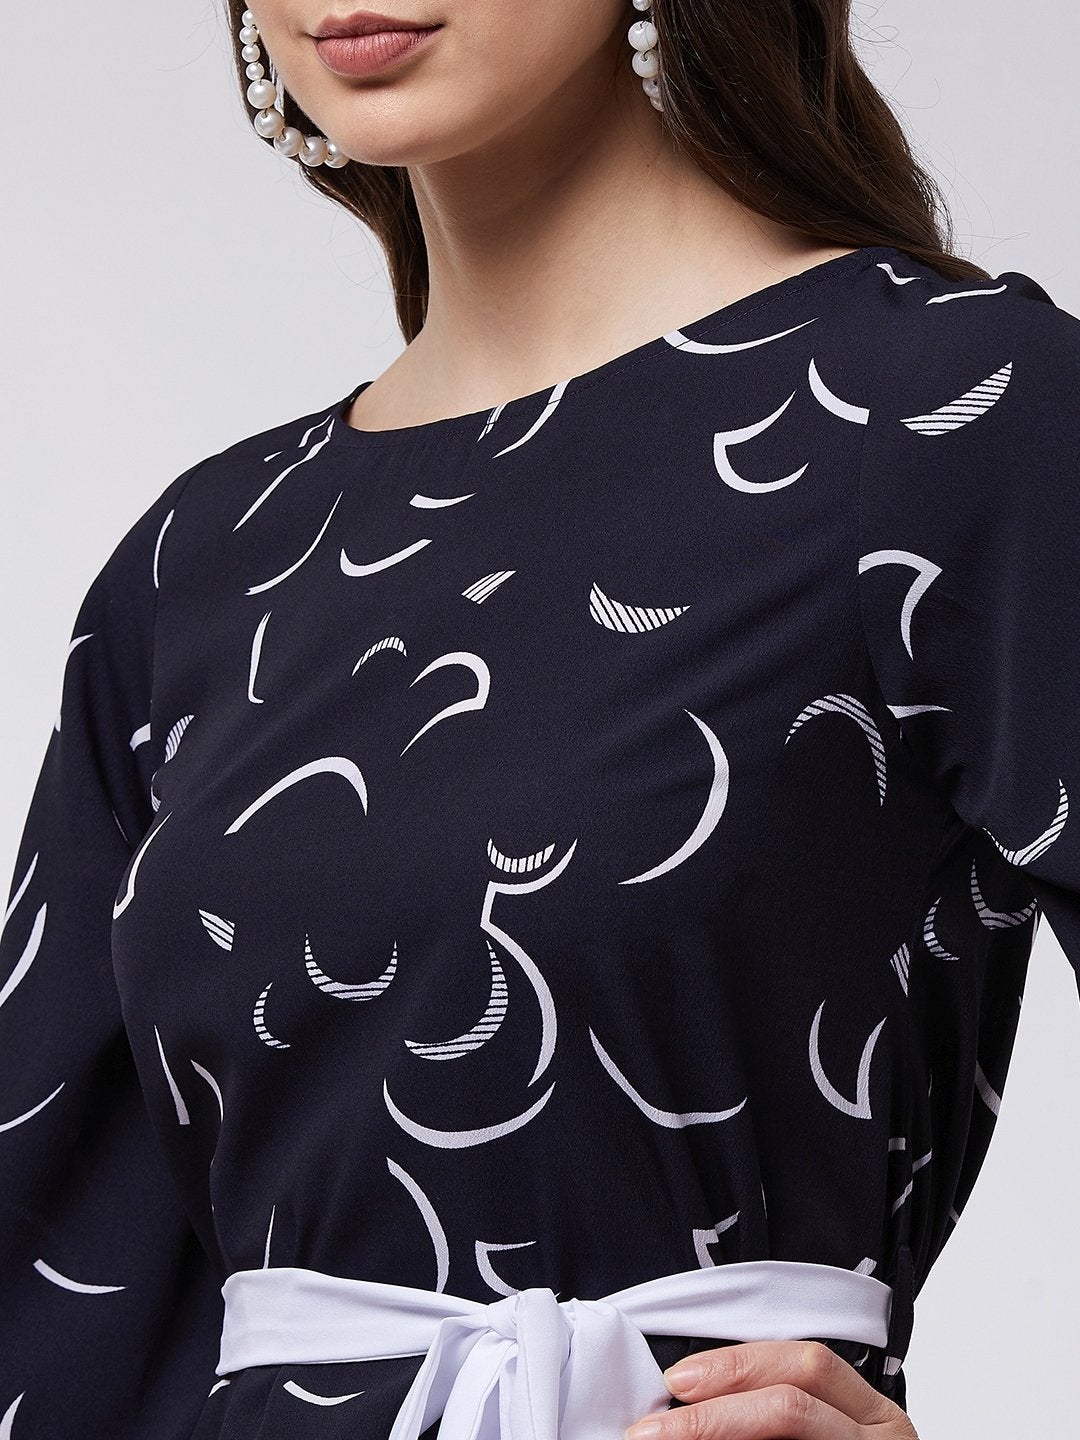 Women's Moon Printed A-Line Dress - Pannkh